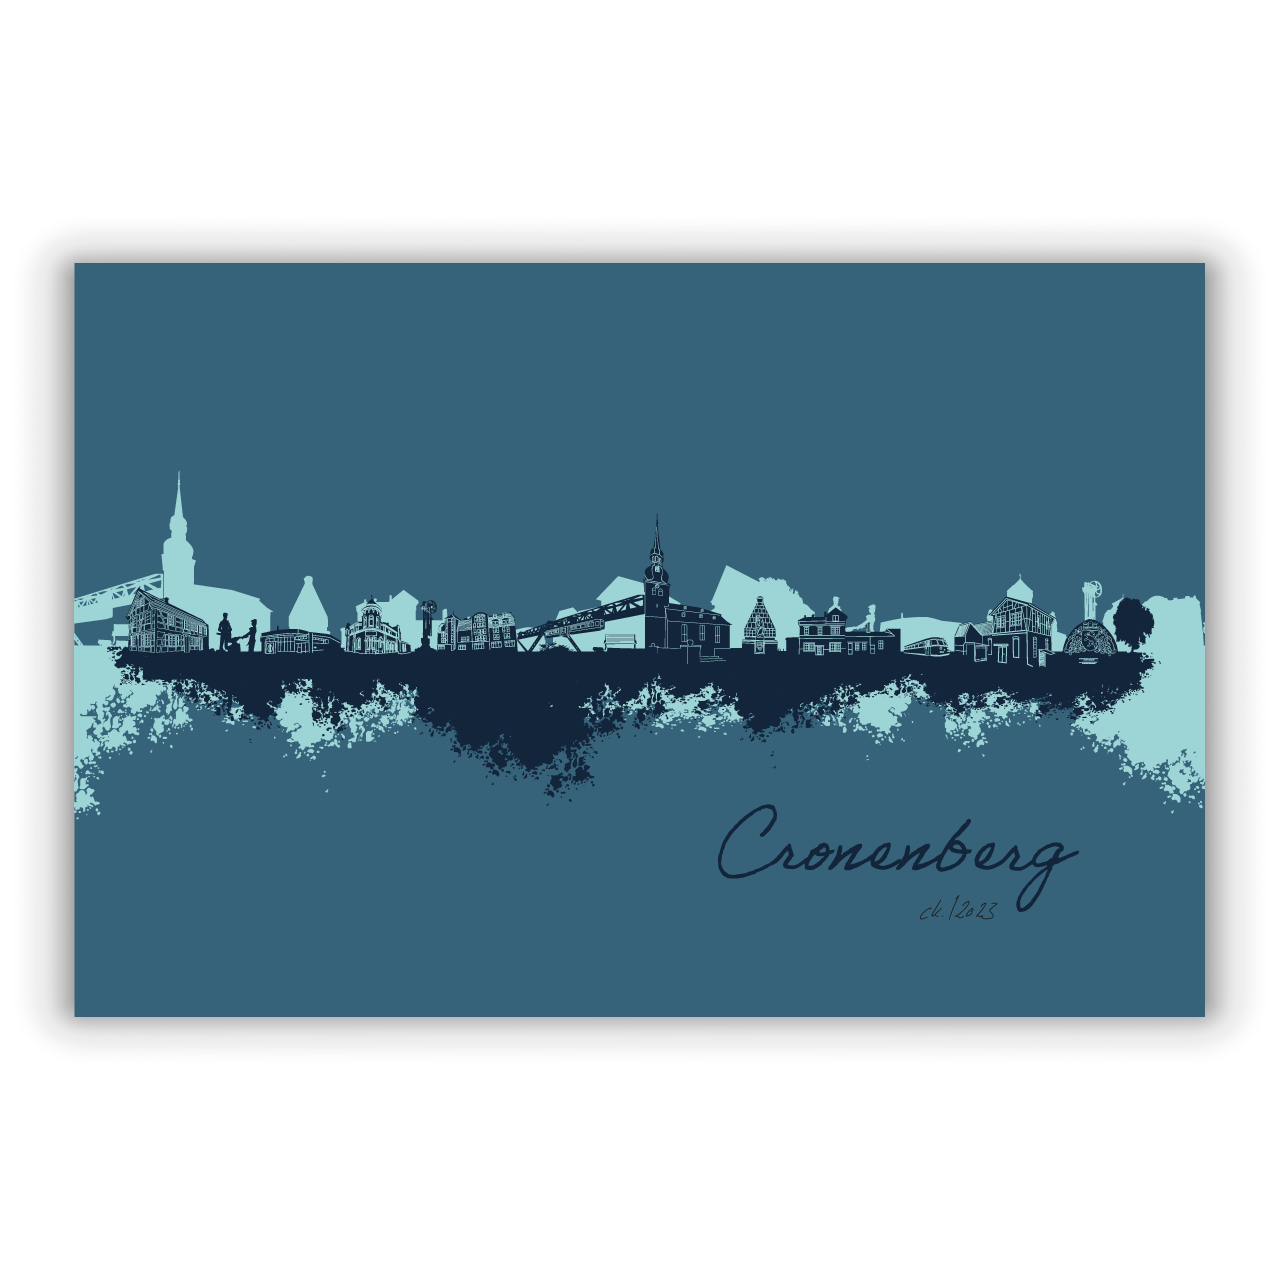 Dorfposter: Cronenberg AluPOP blau